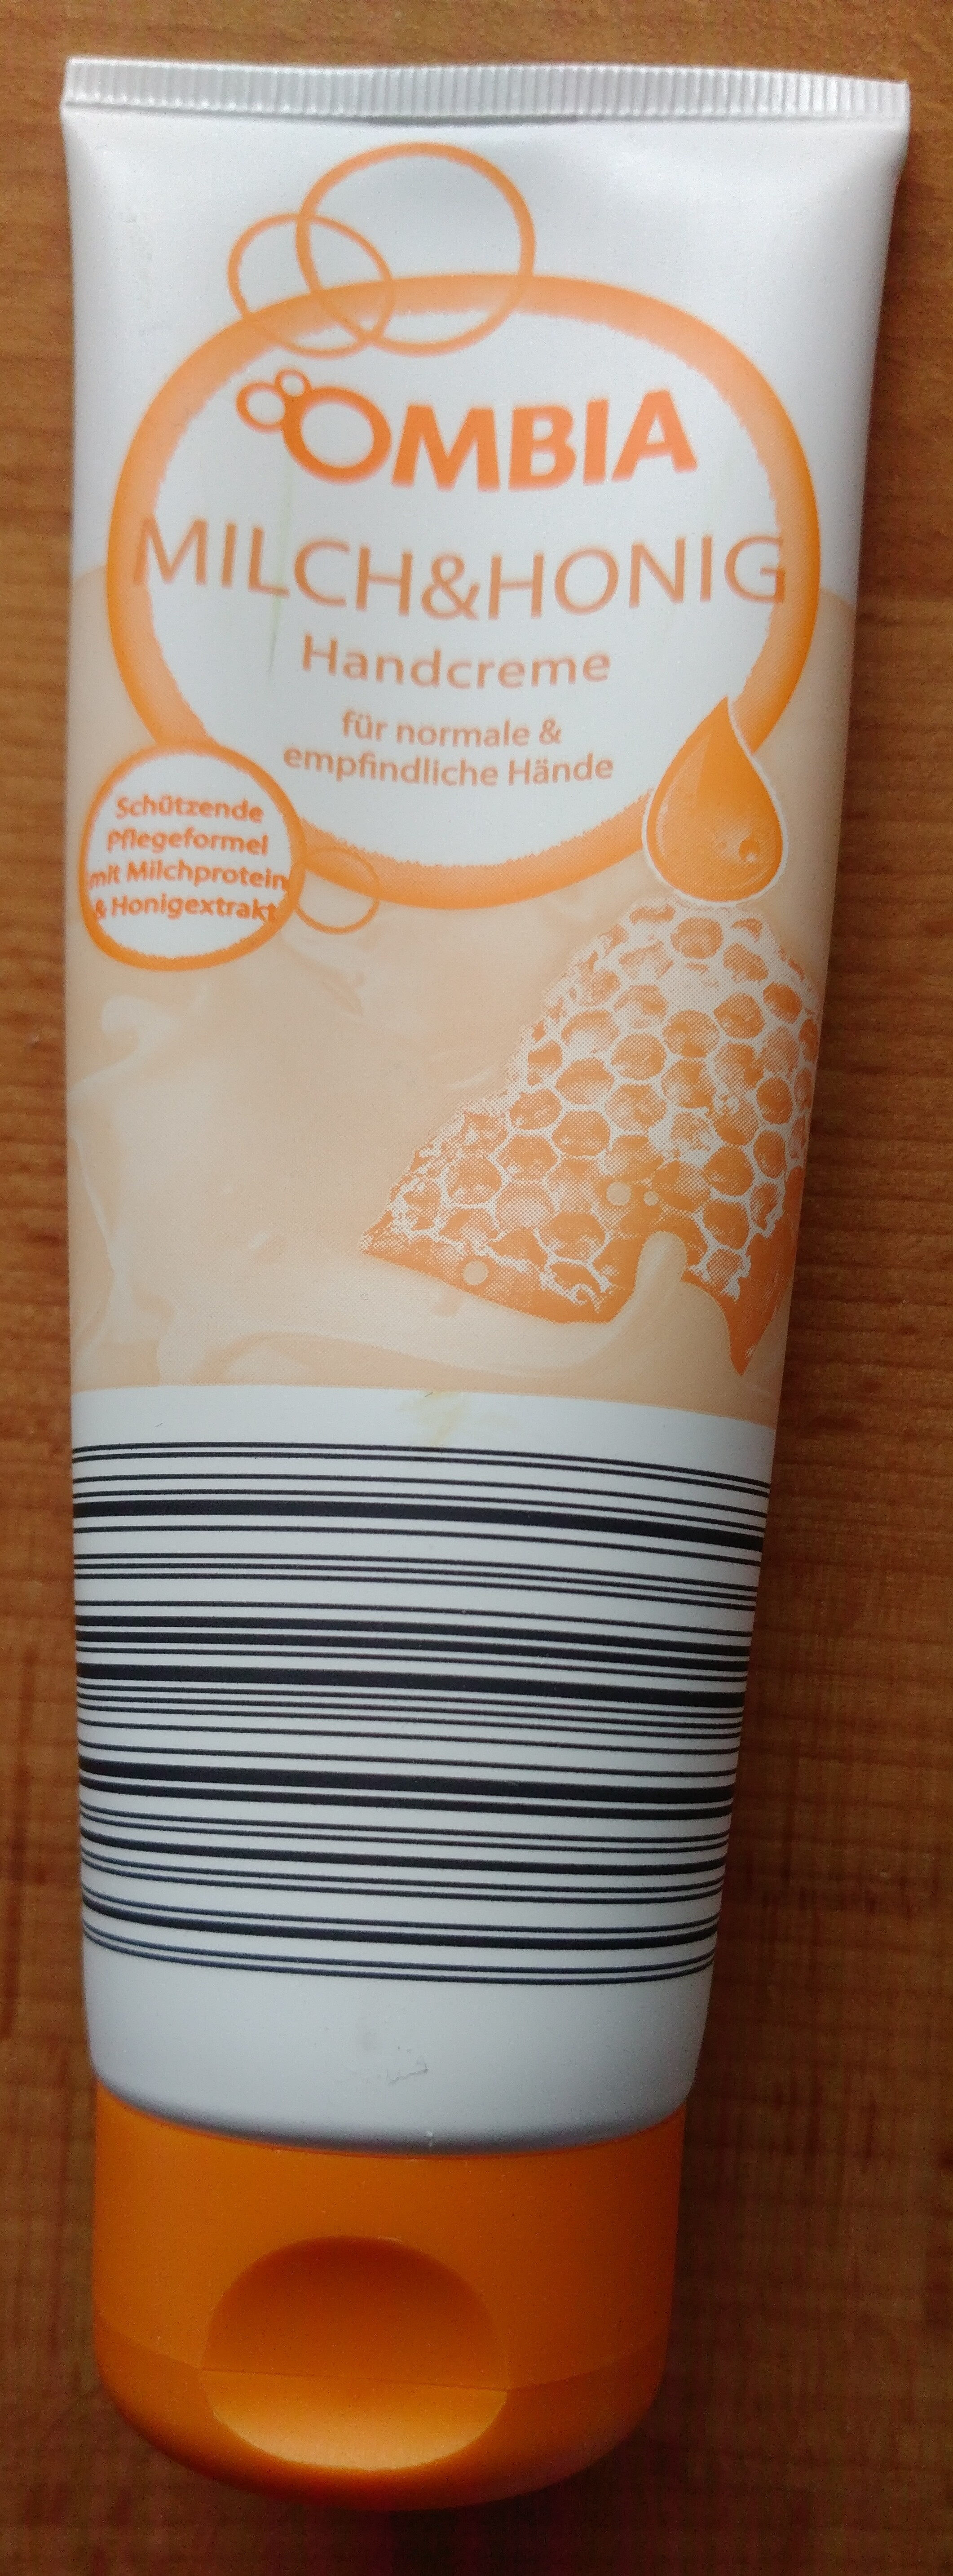 Milch & Honig Handcreme - Produkt - de